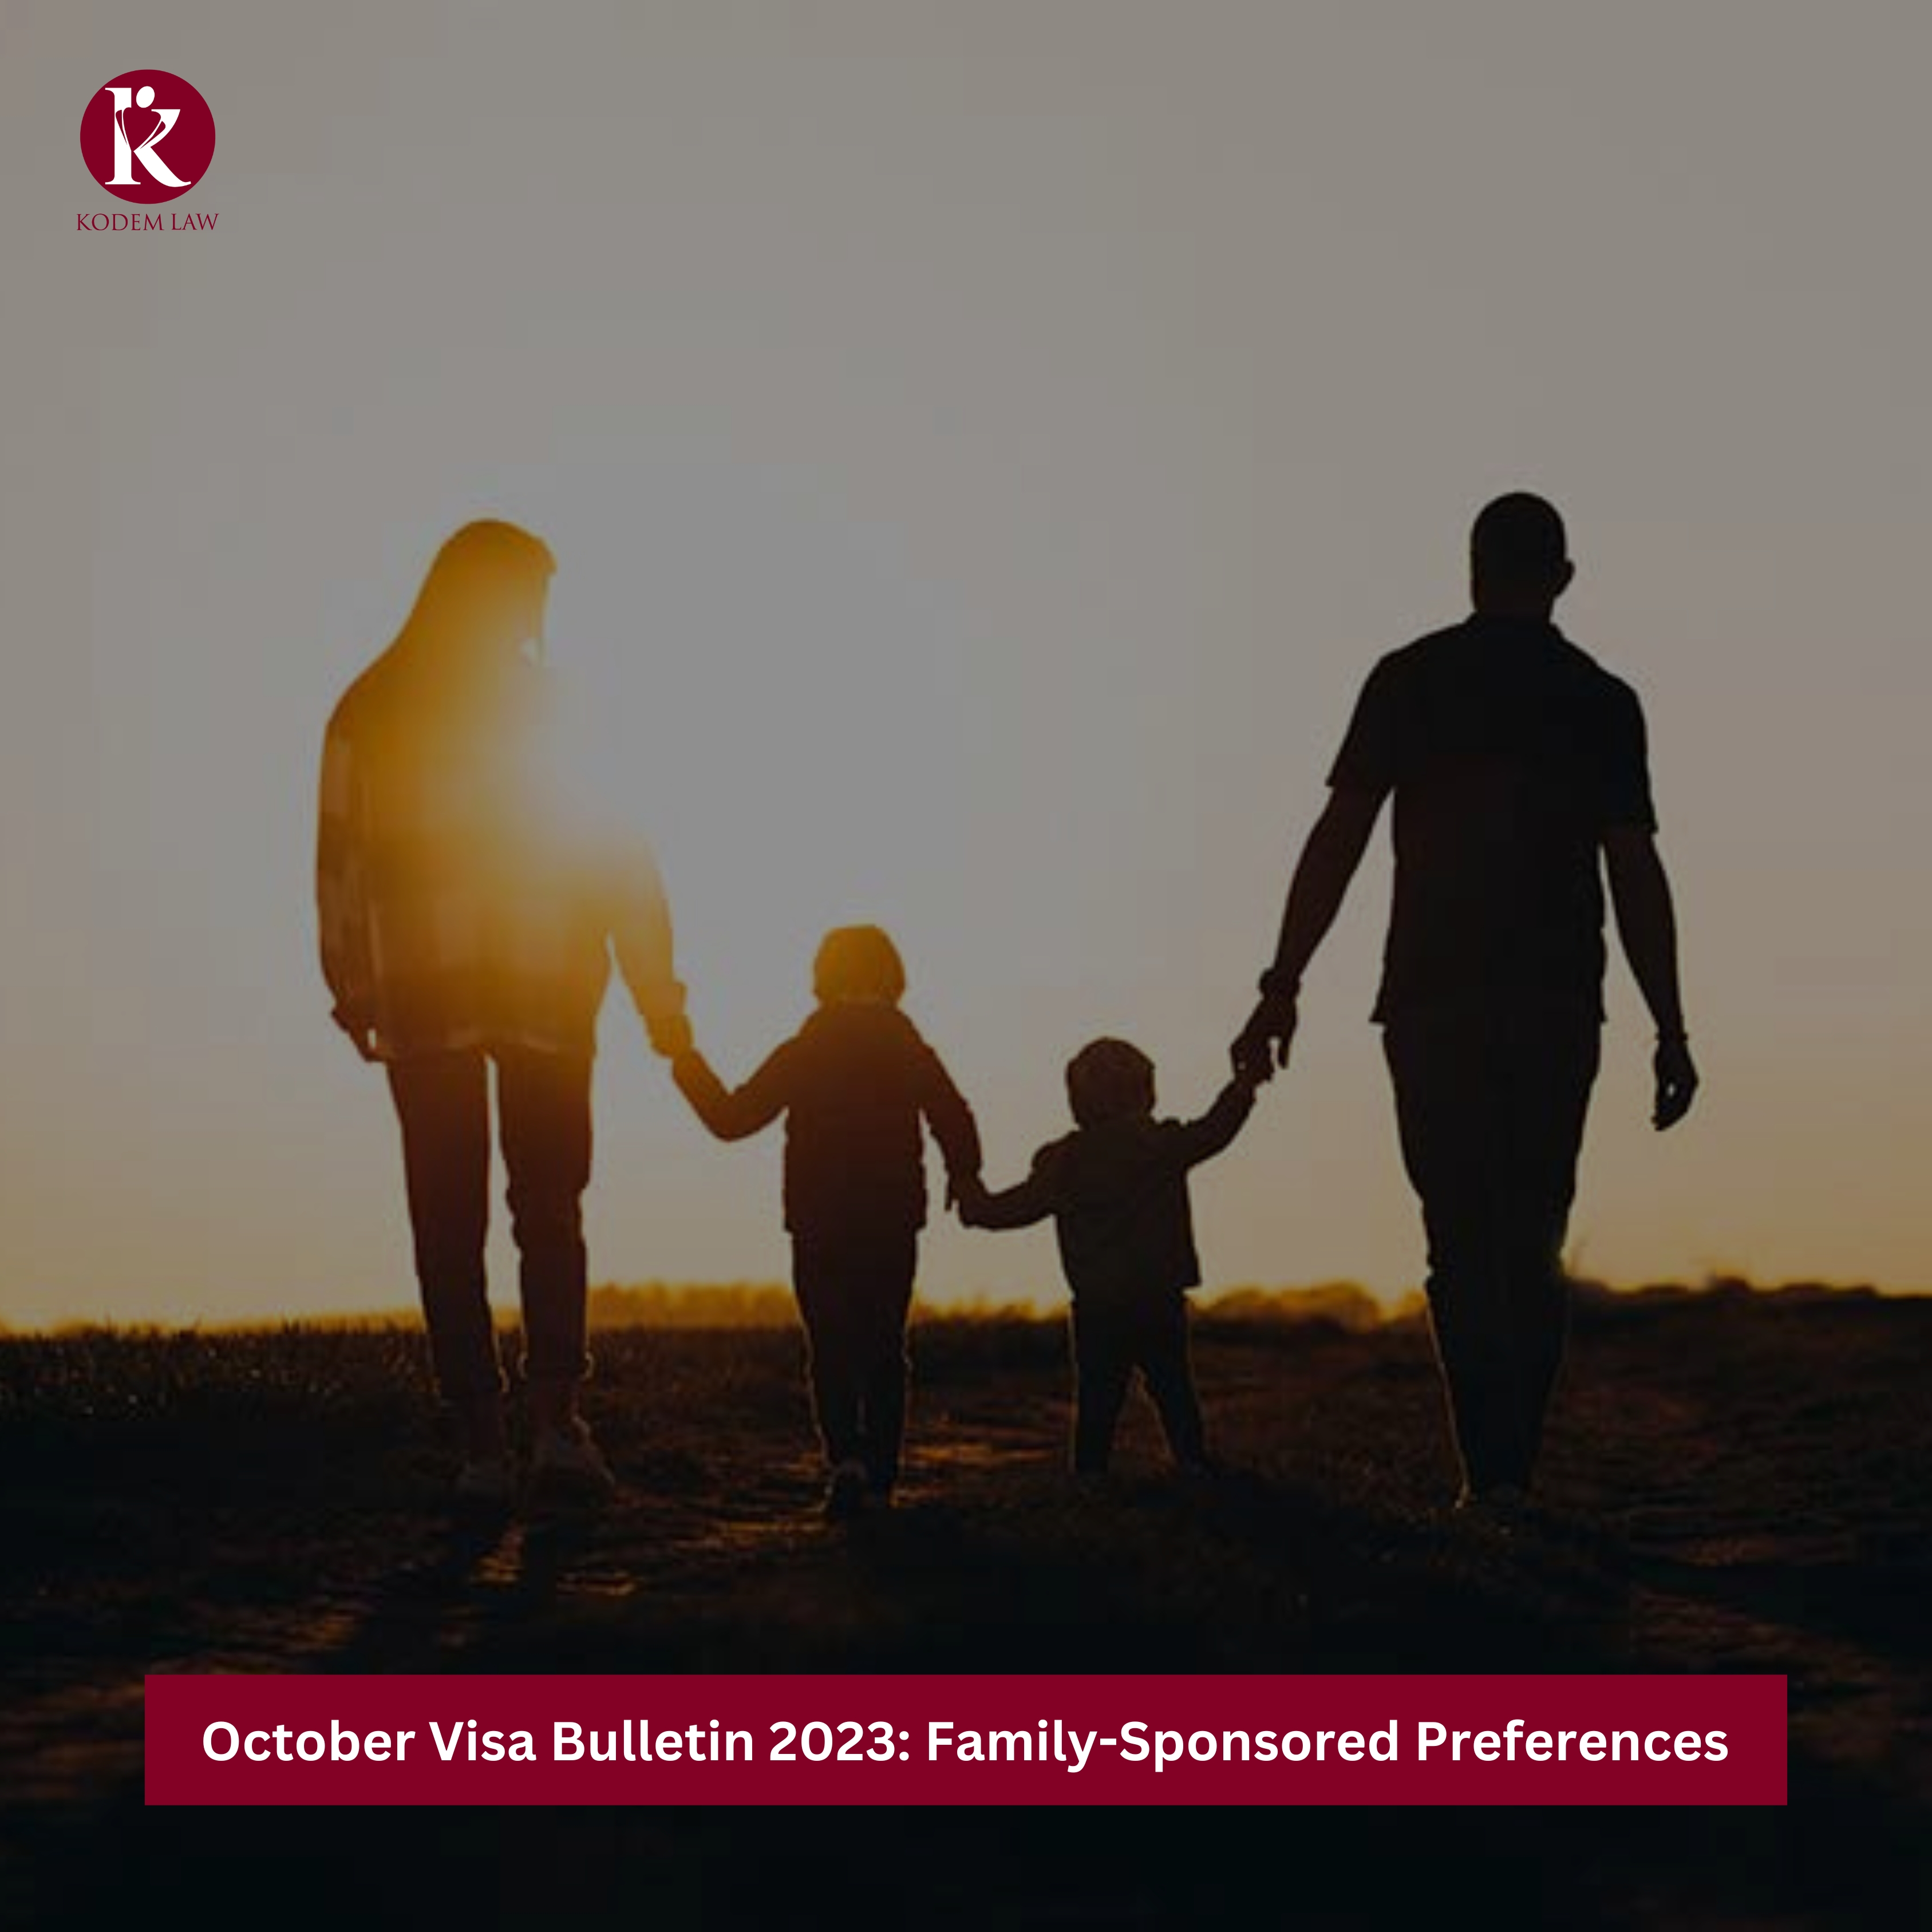 October Visa Bulletin 2023: Family-Sponsored Preferences